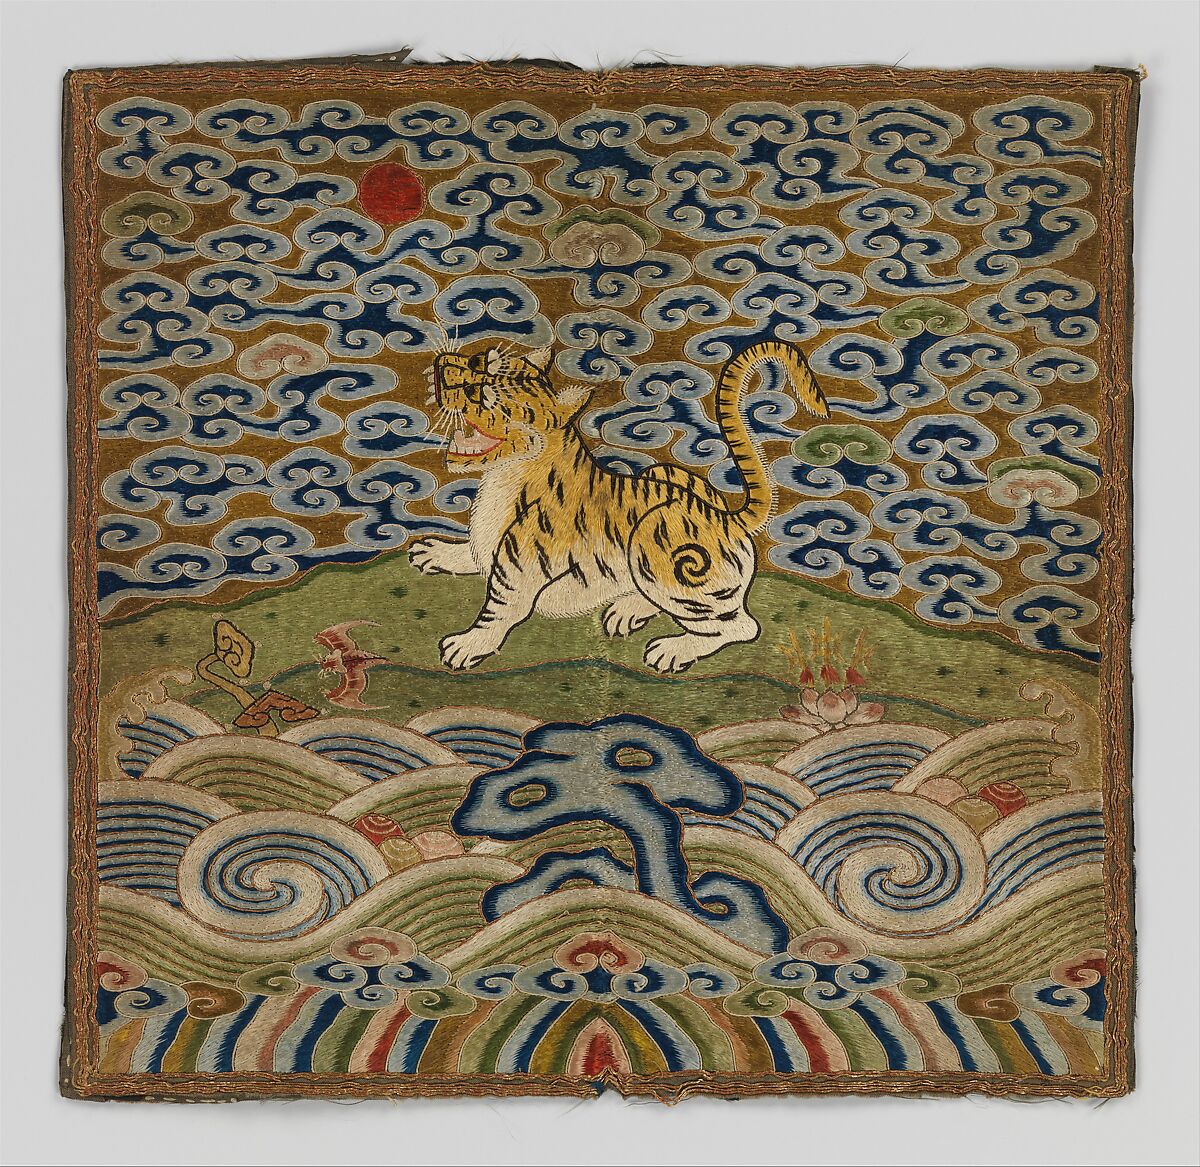 Rank badge with tiger, Silk, metallic thread, China 